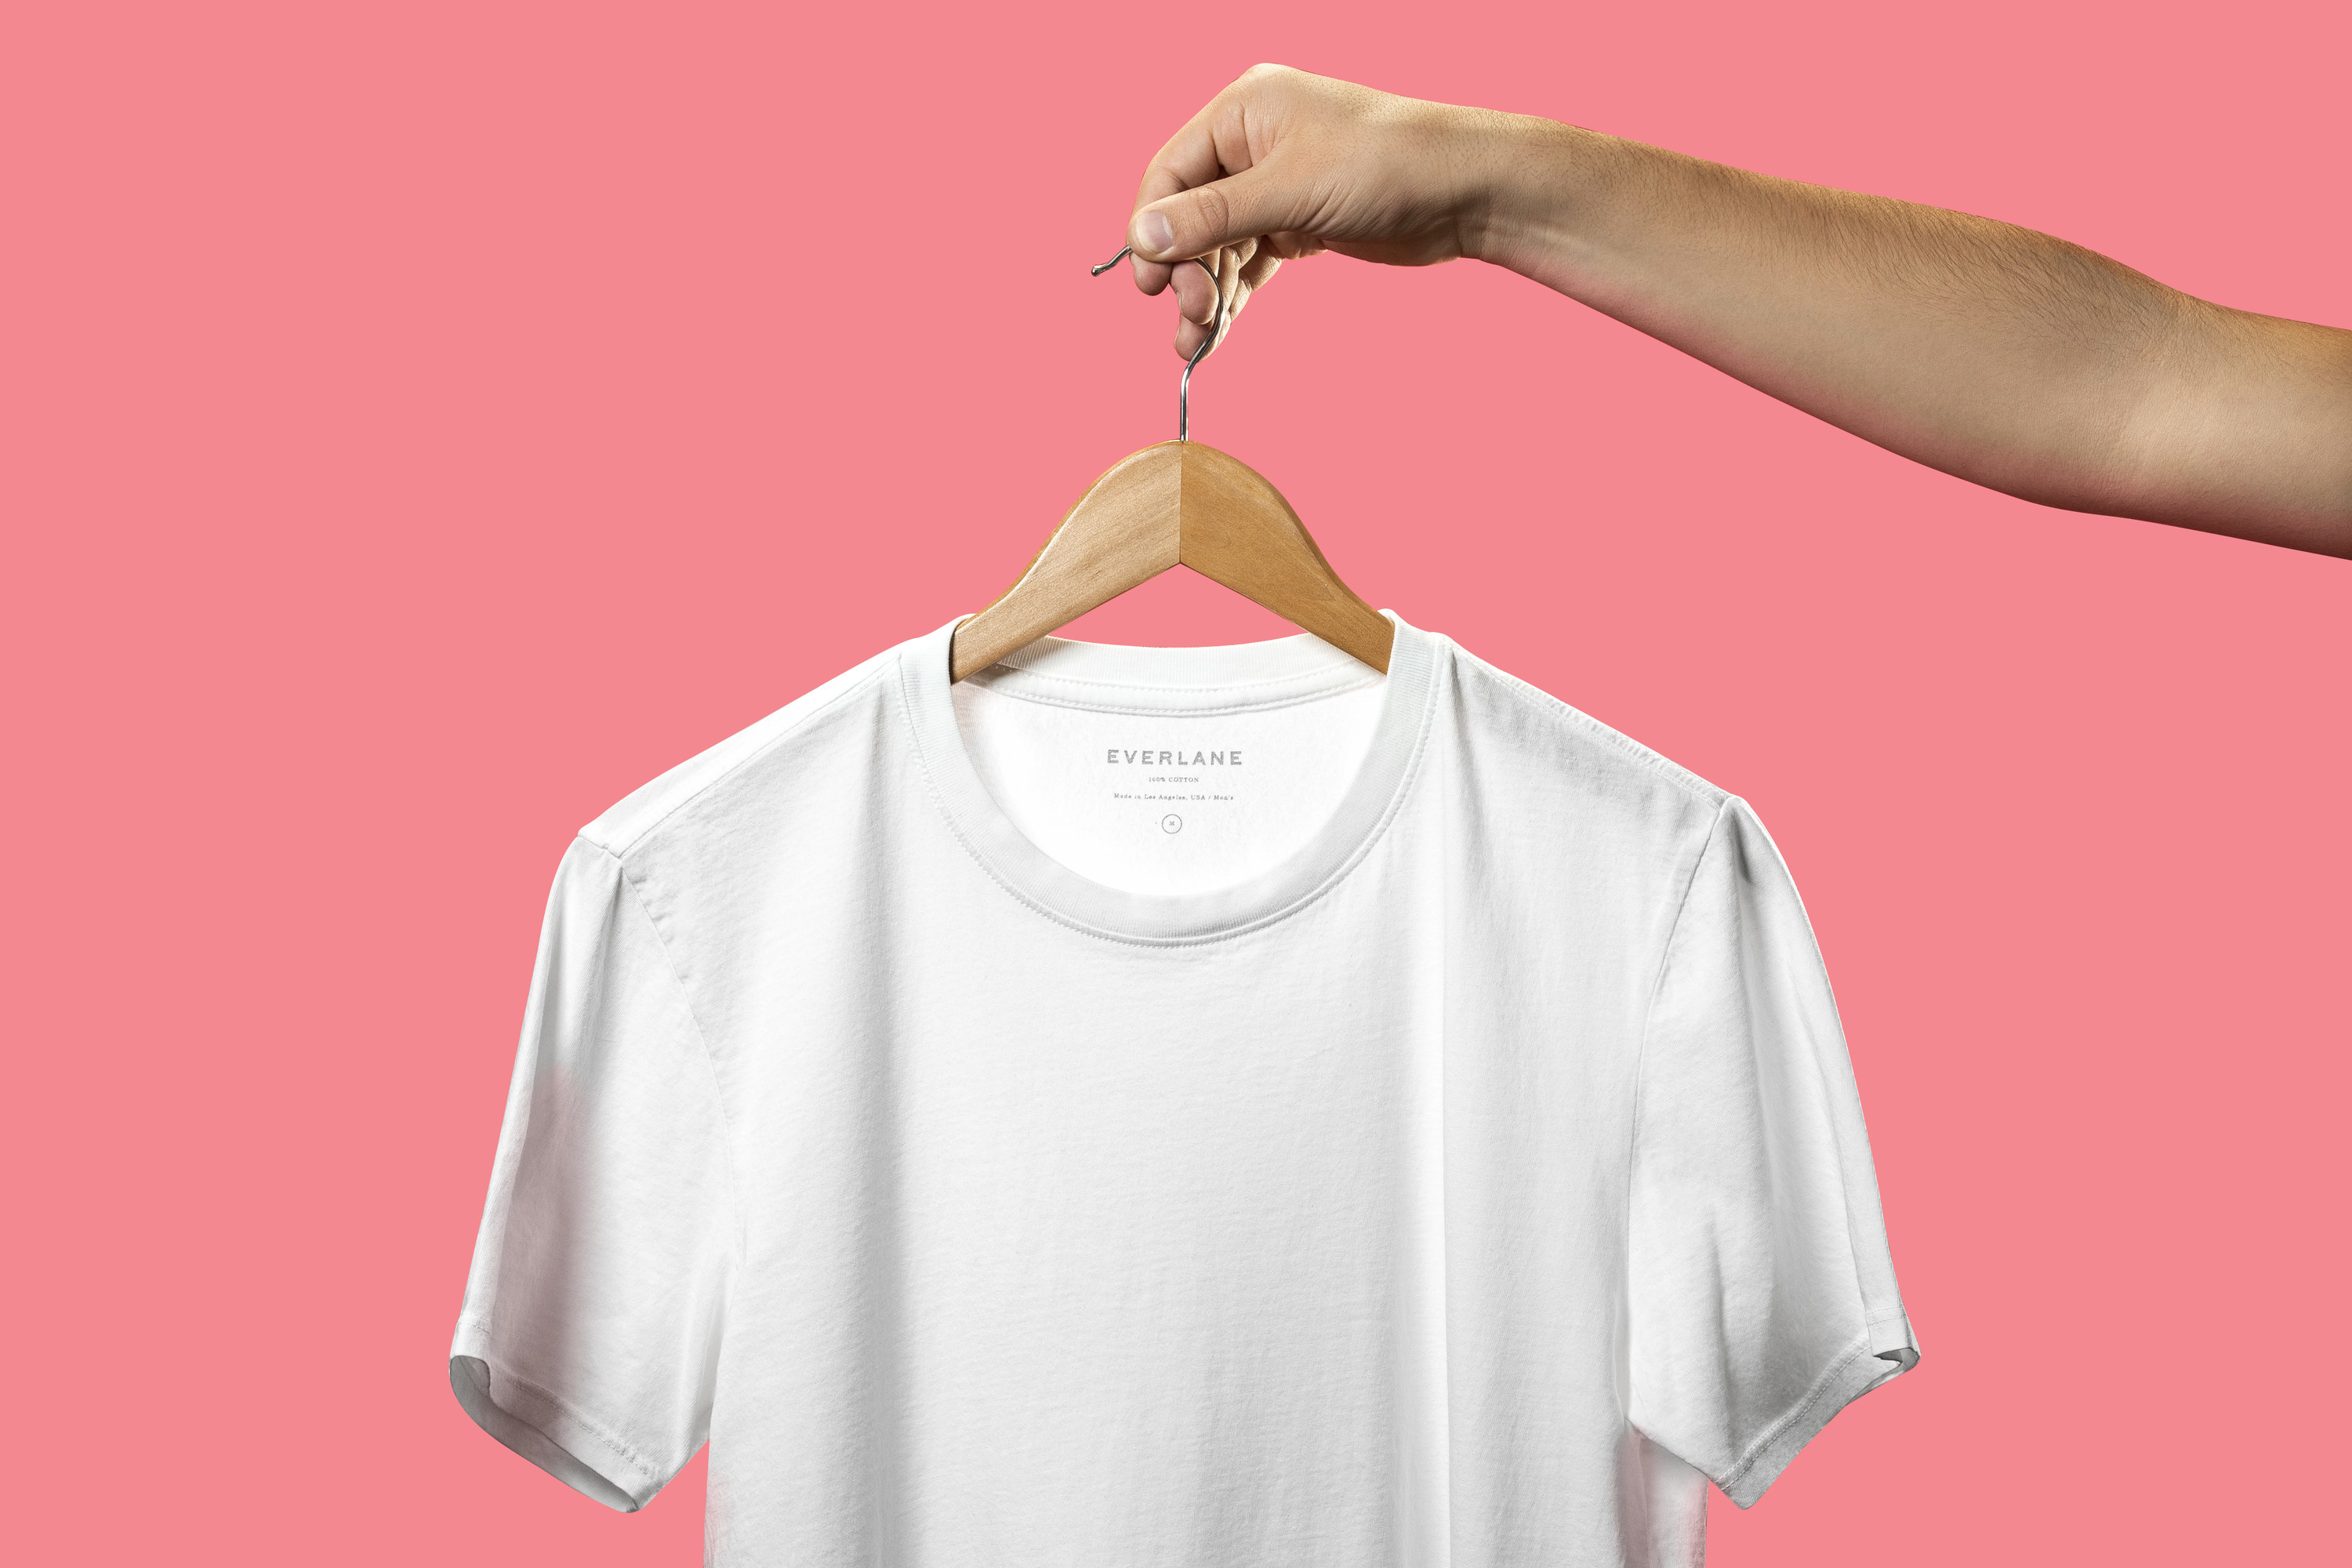 Men's White Top Quality T-Shirt - corbaraweb